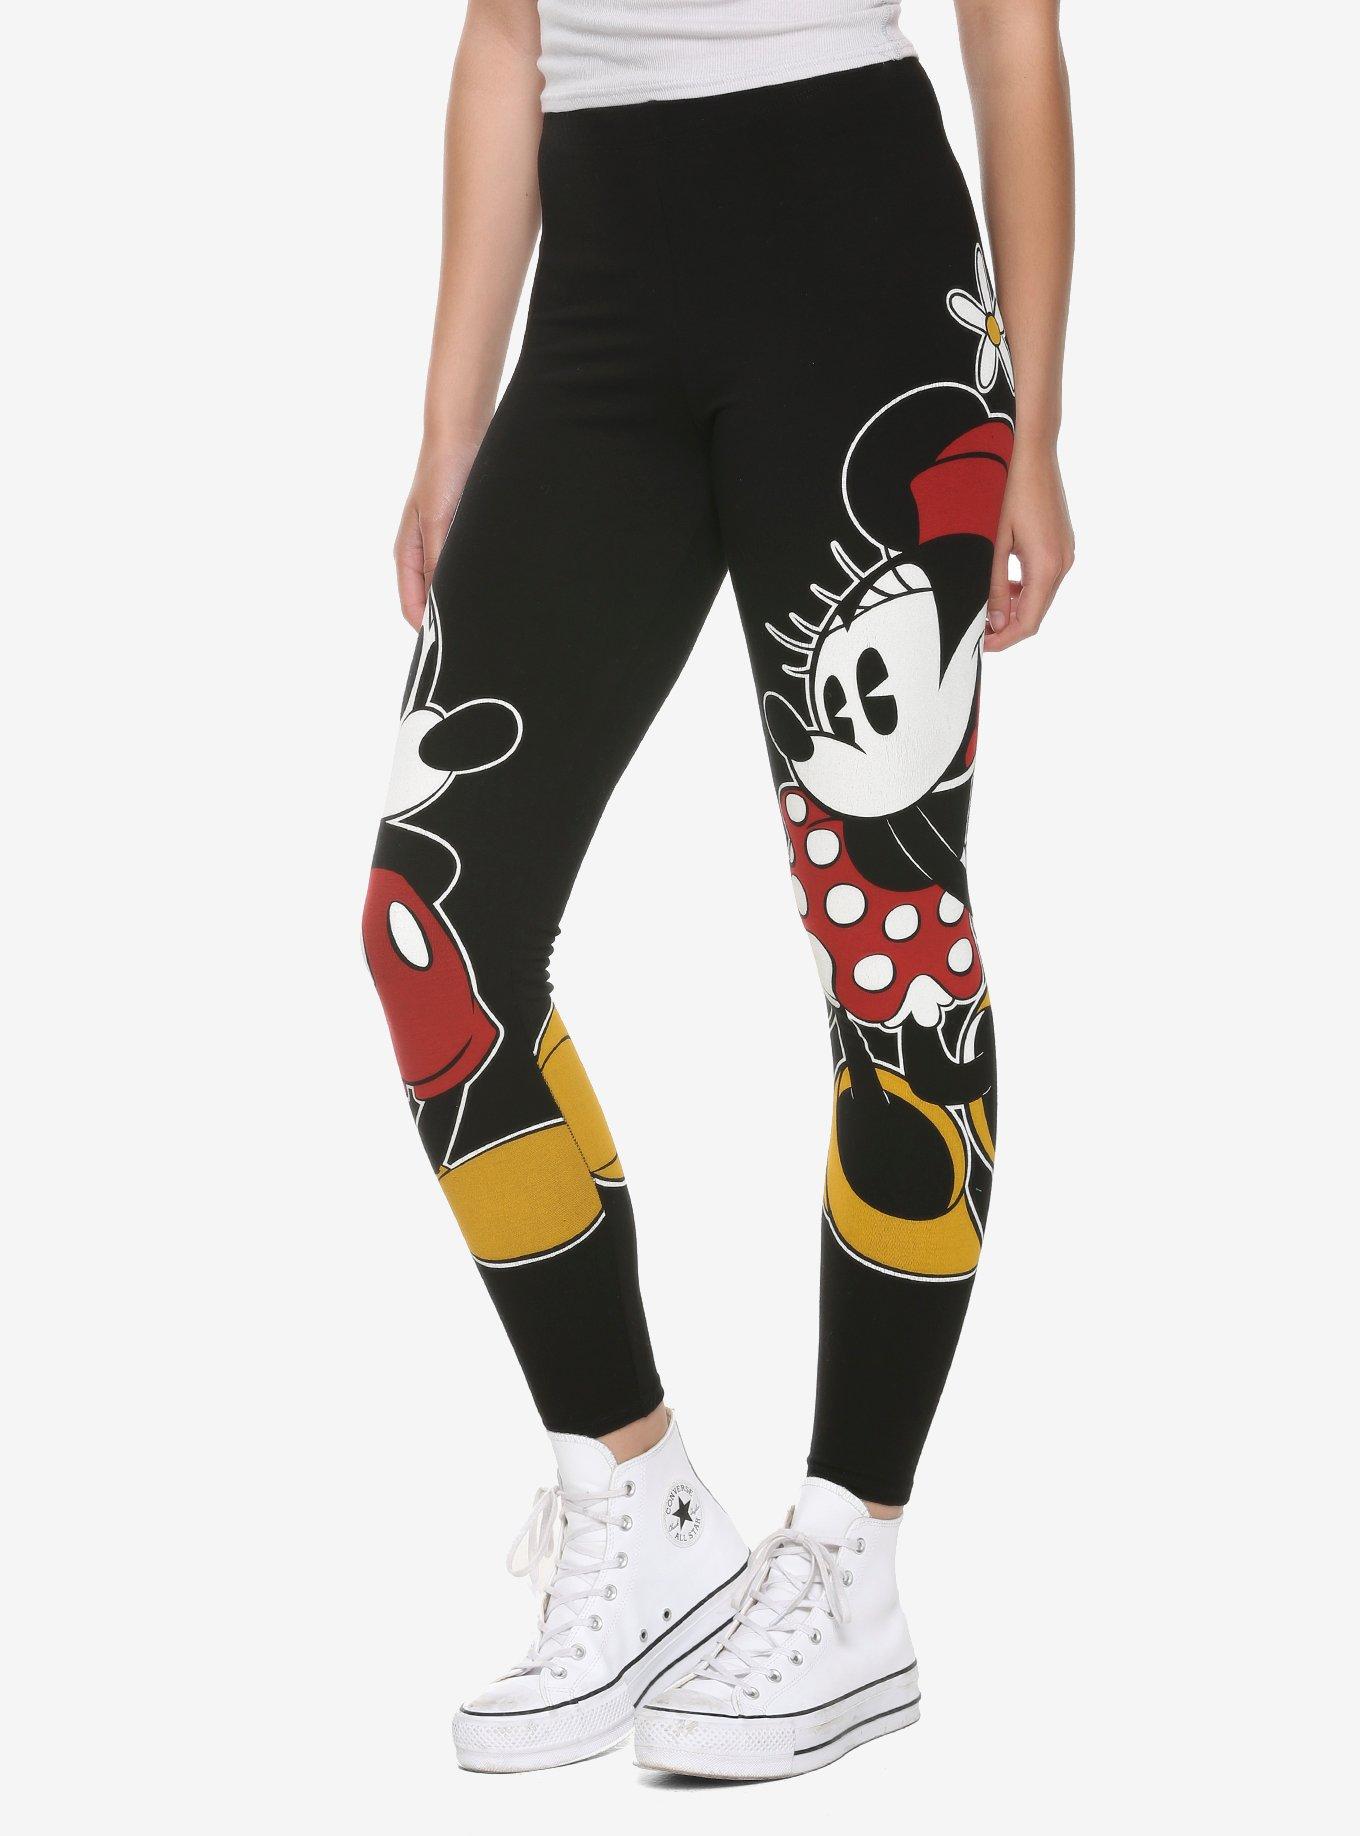 Disney Mickey Mouse Girls Kids Warm Brushed Fleece Lined Legging